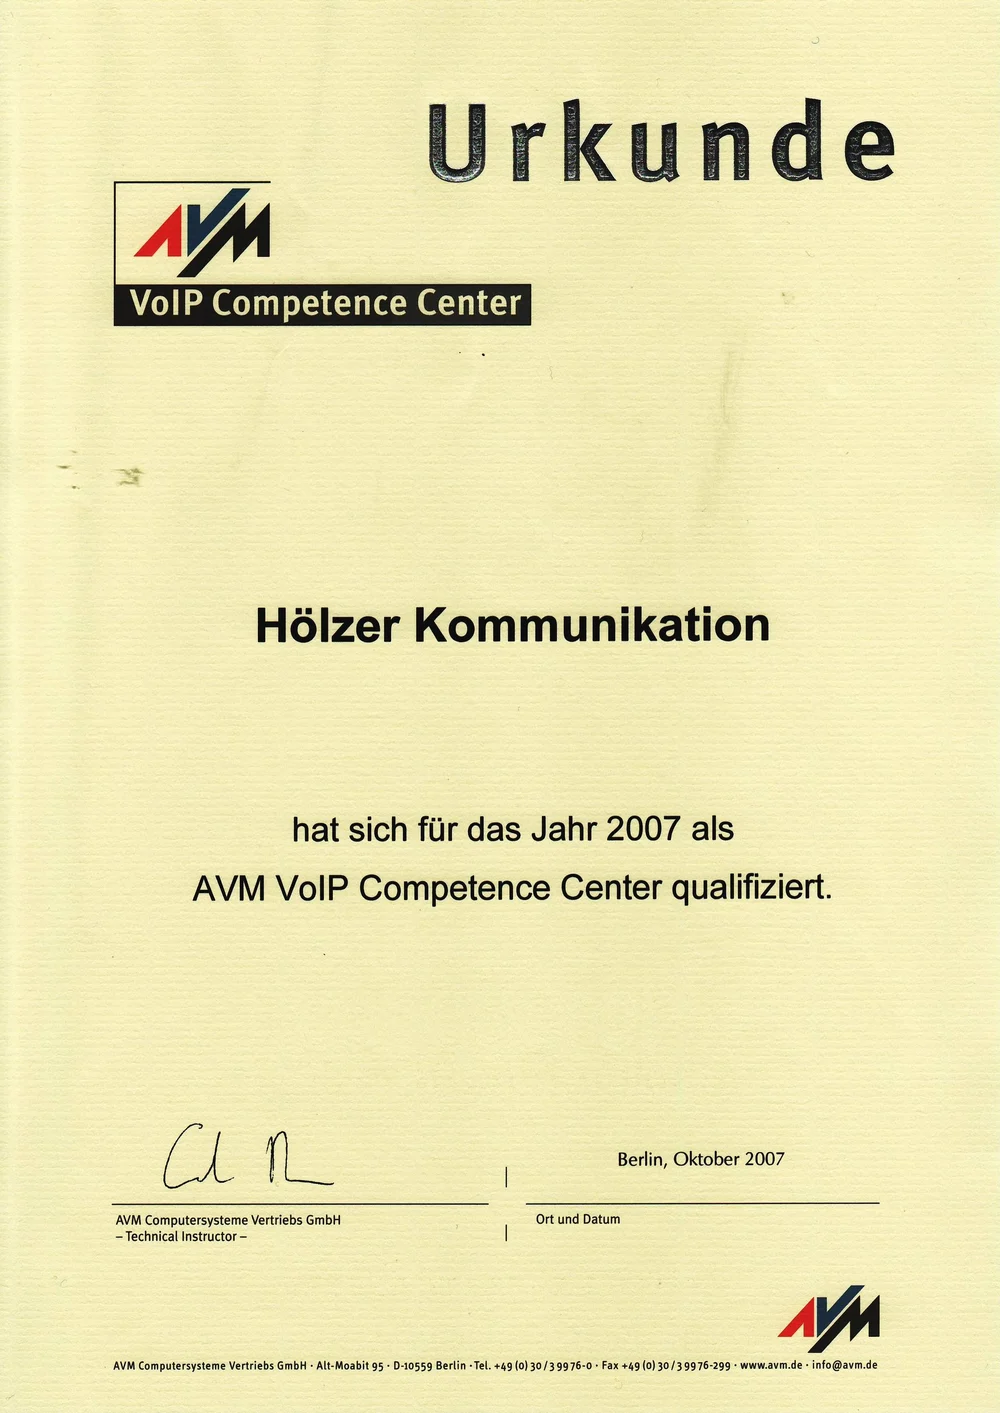 AVM VoIP Competence Center Urkunde, 2007